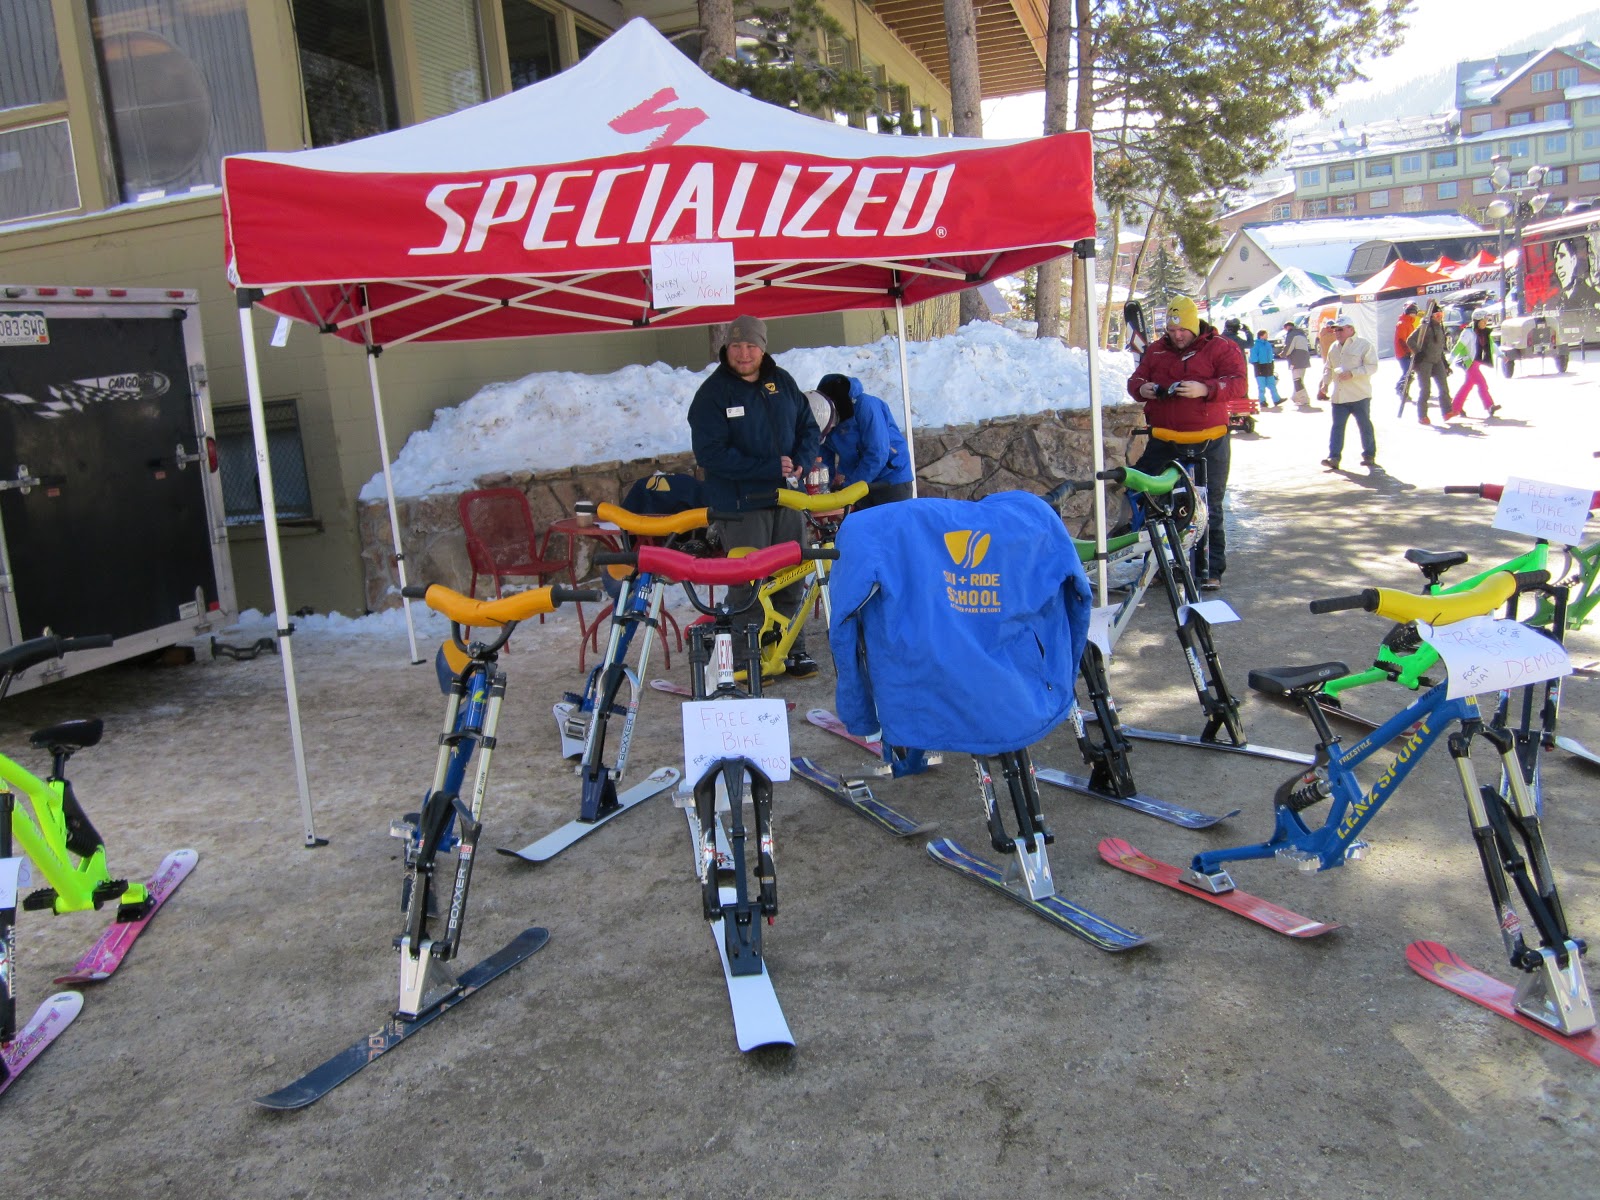 Lenz Sport Launch SkiBike - Freestyle Ski Bike Colorado